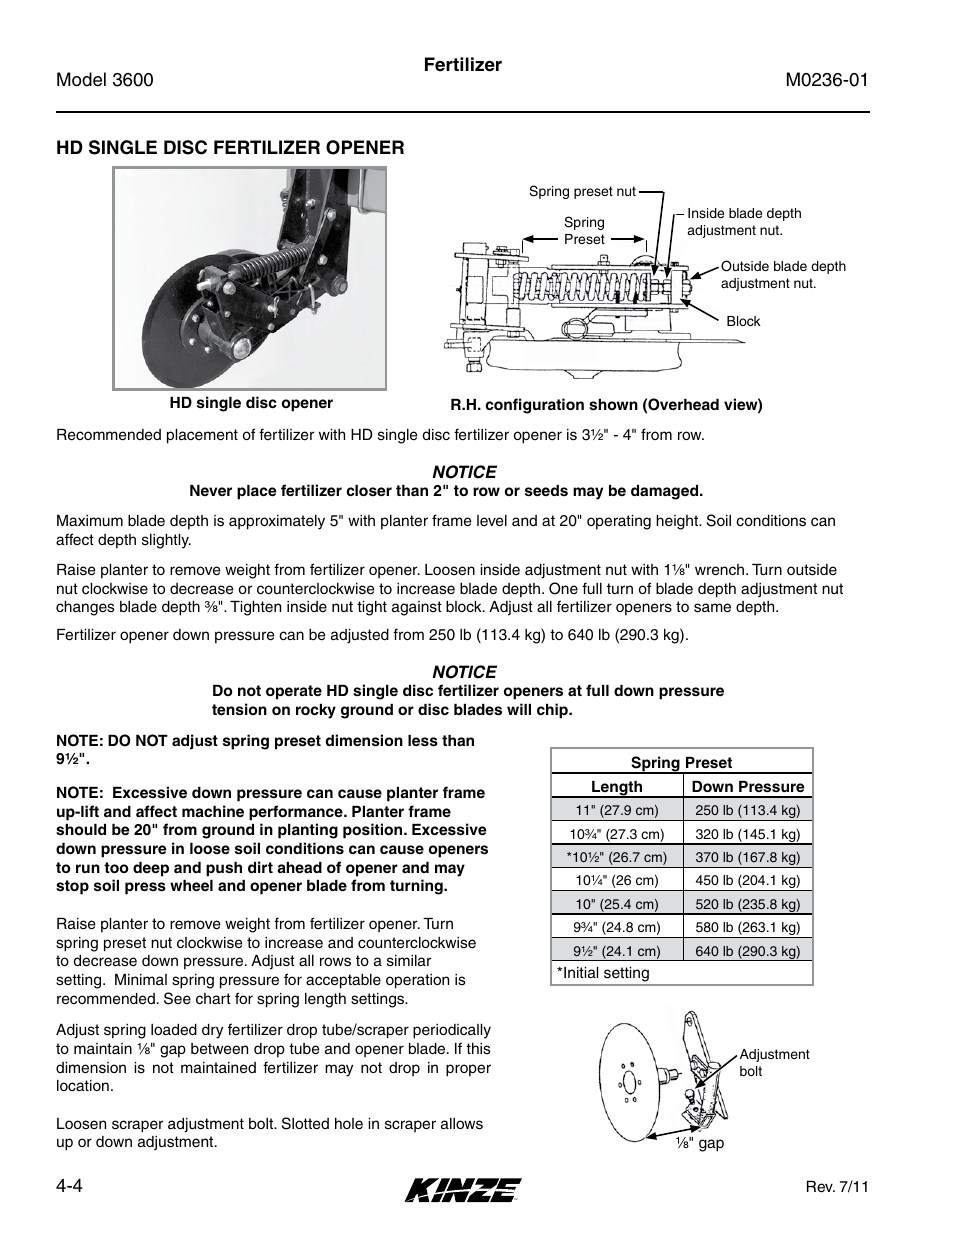 Hd single disc fertilizer opener, Hd single disc fertilizer opener -4 | Kinze 3600 Lift and Rotate Planter Rev. 7/14 User Manual | Page 72 / 172